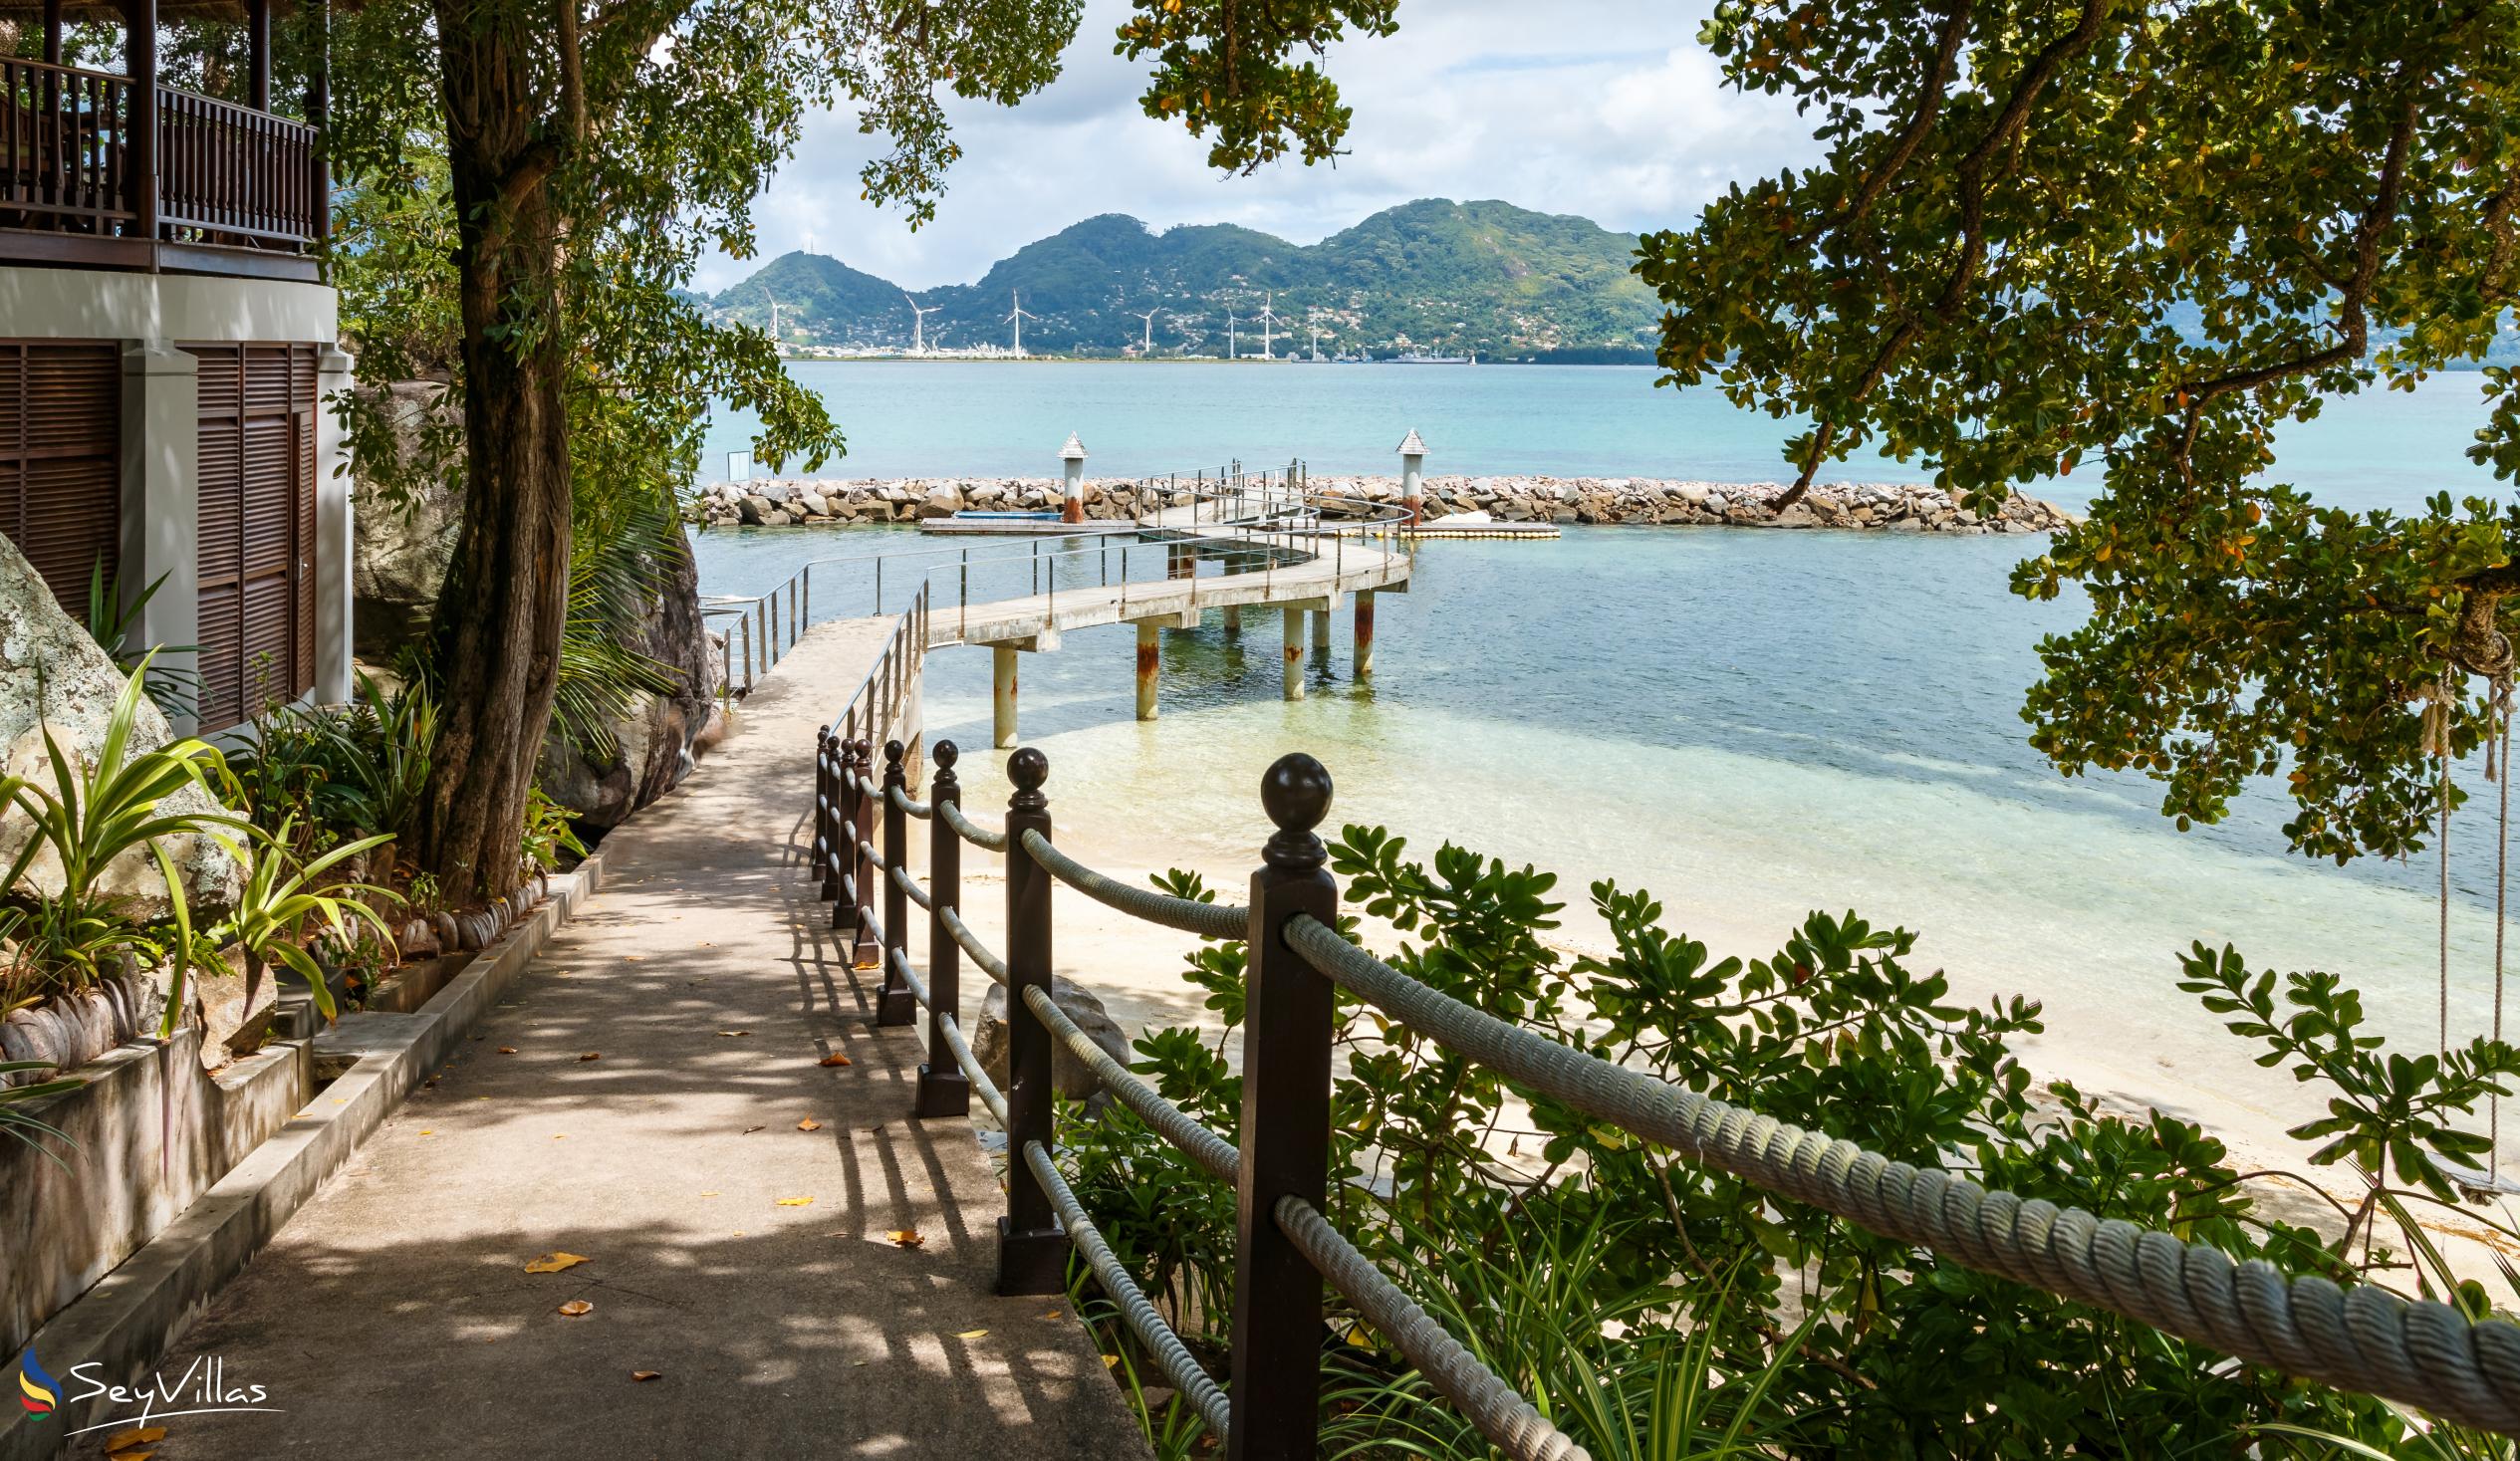 Photo 11: Cerf Island Resort - Outdoor area - Cerf Island (Seychelles)